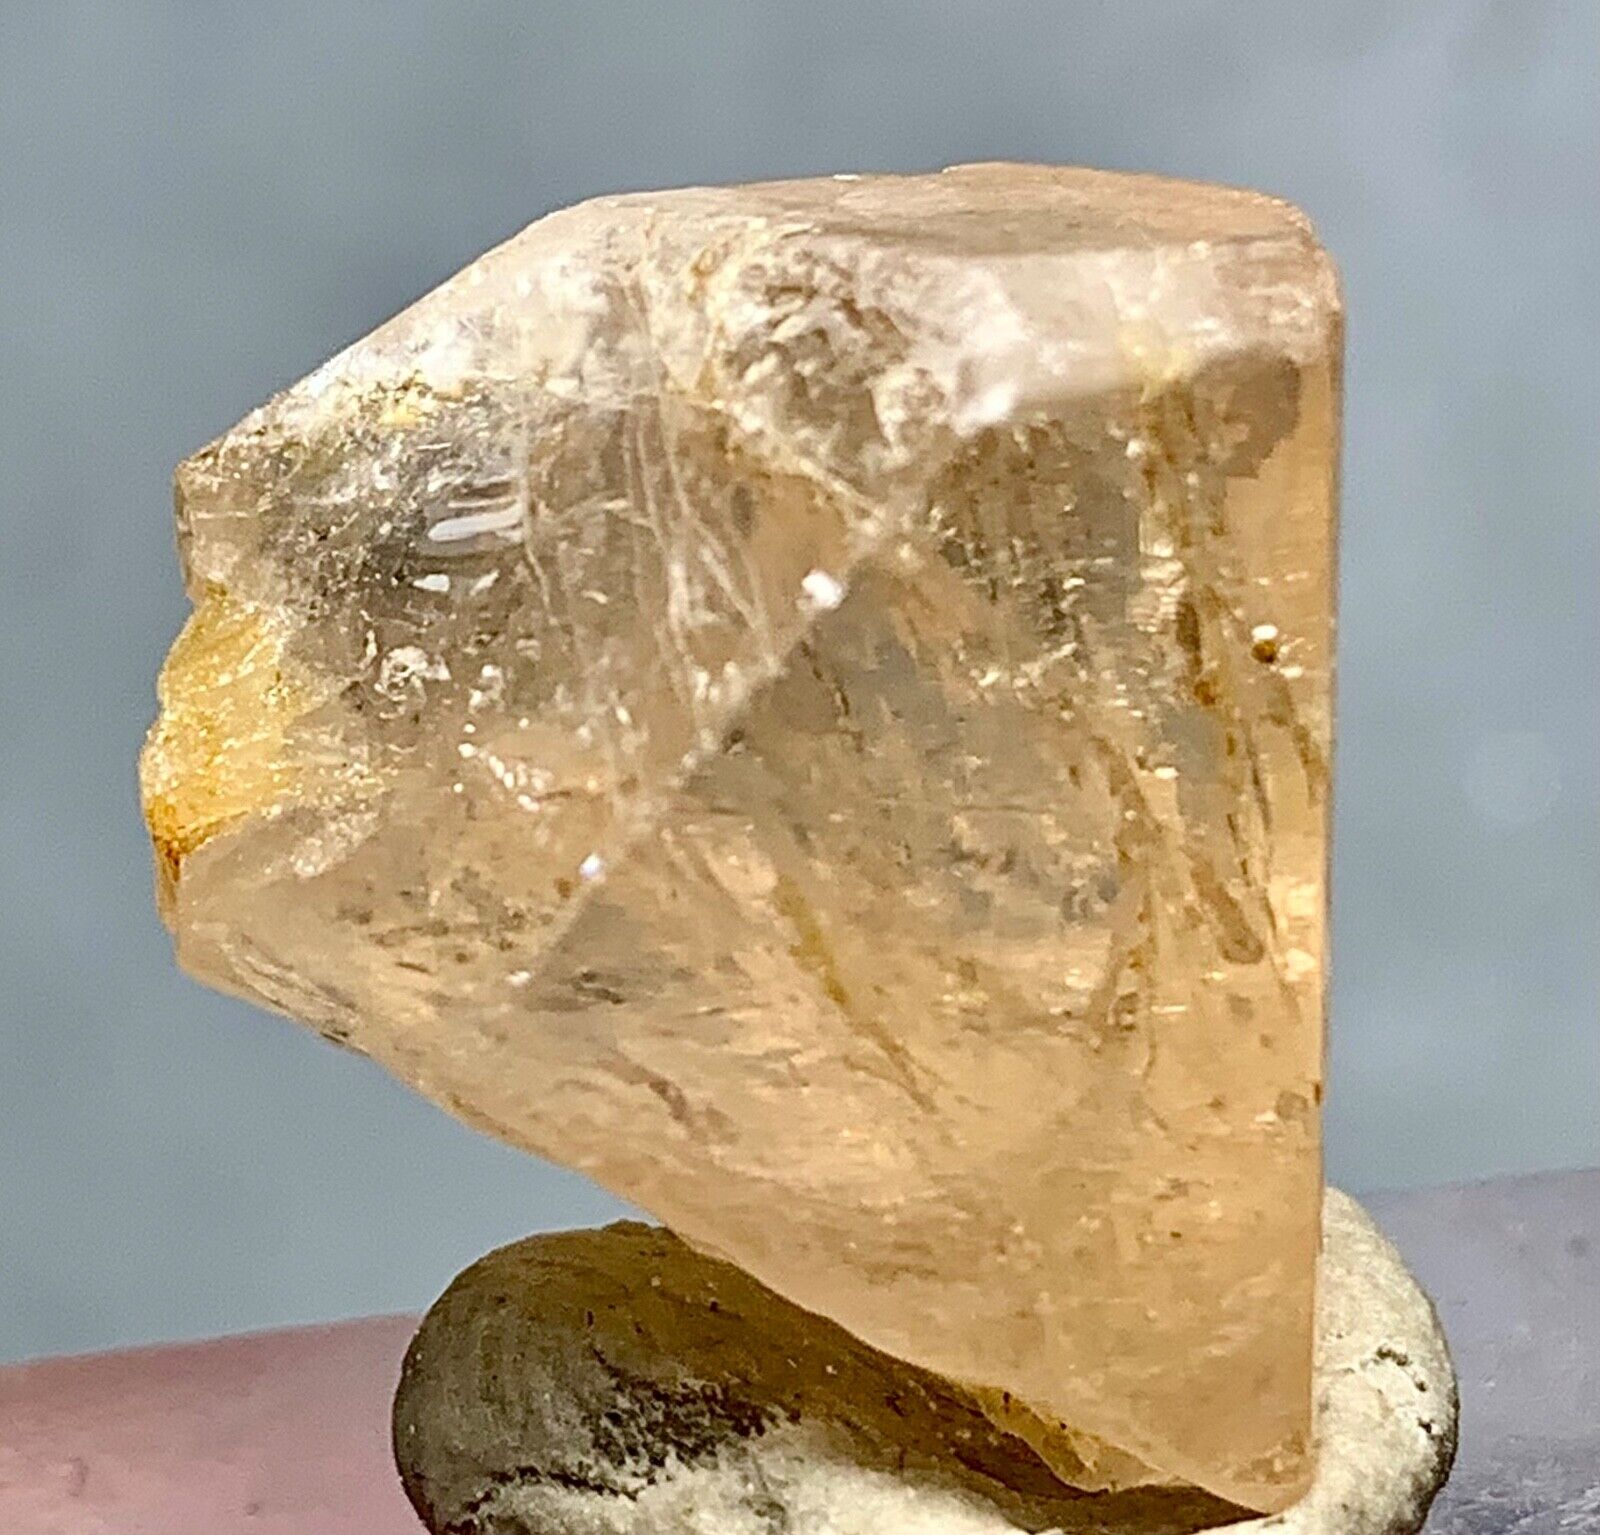 44 Carat Natural Topaz Crystal From Pakistan